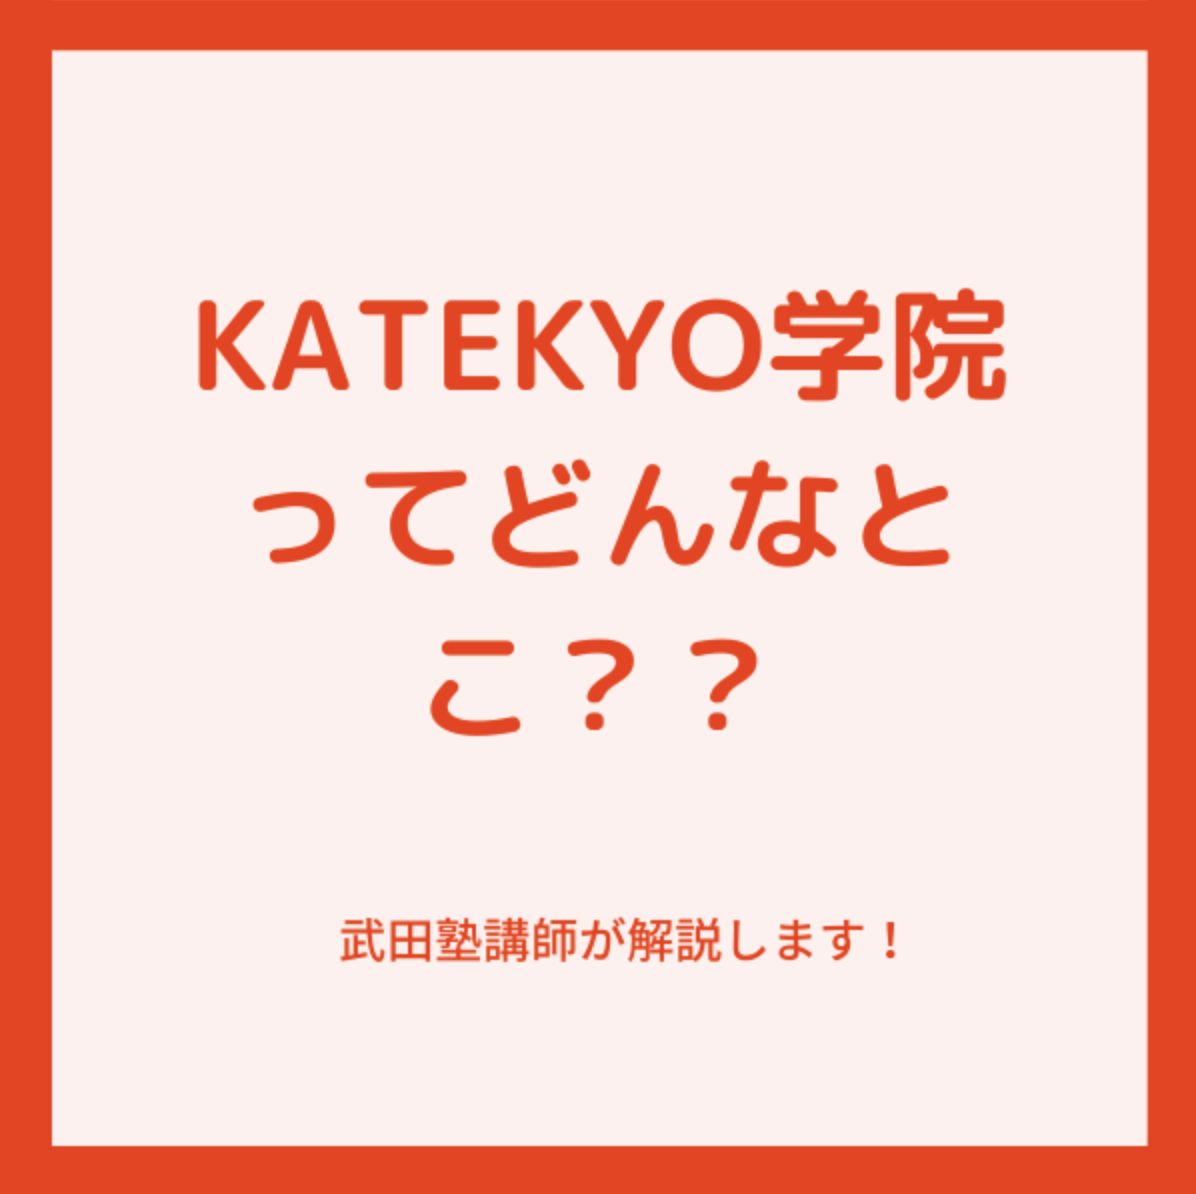 KATEKYO学院の口コミ・評判・料金について解説